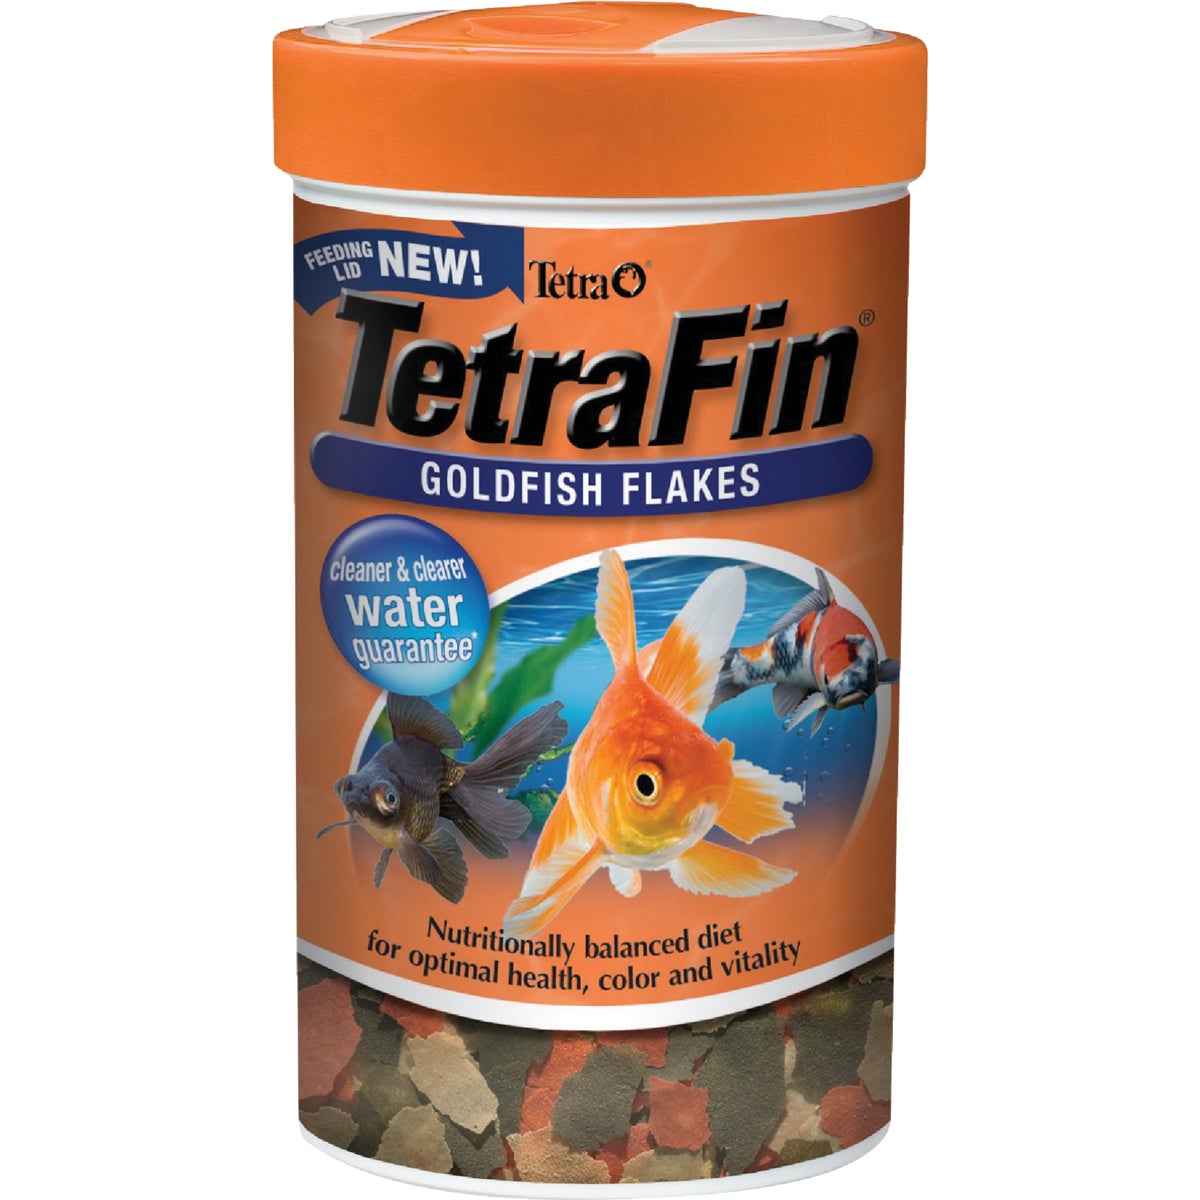 Item 809432, TetraFin goldfish food flakes.